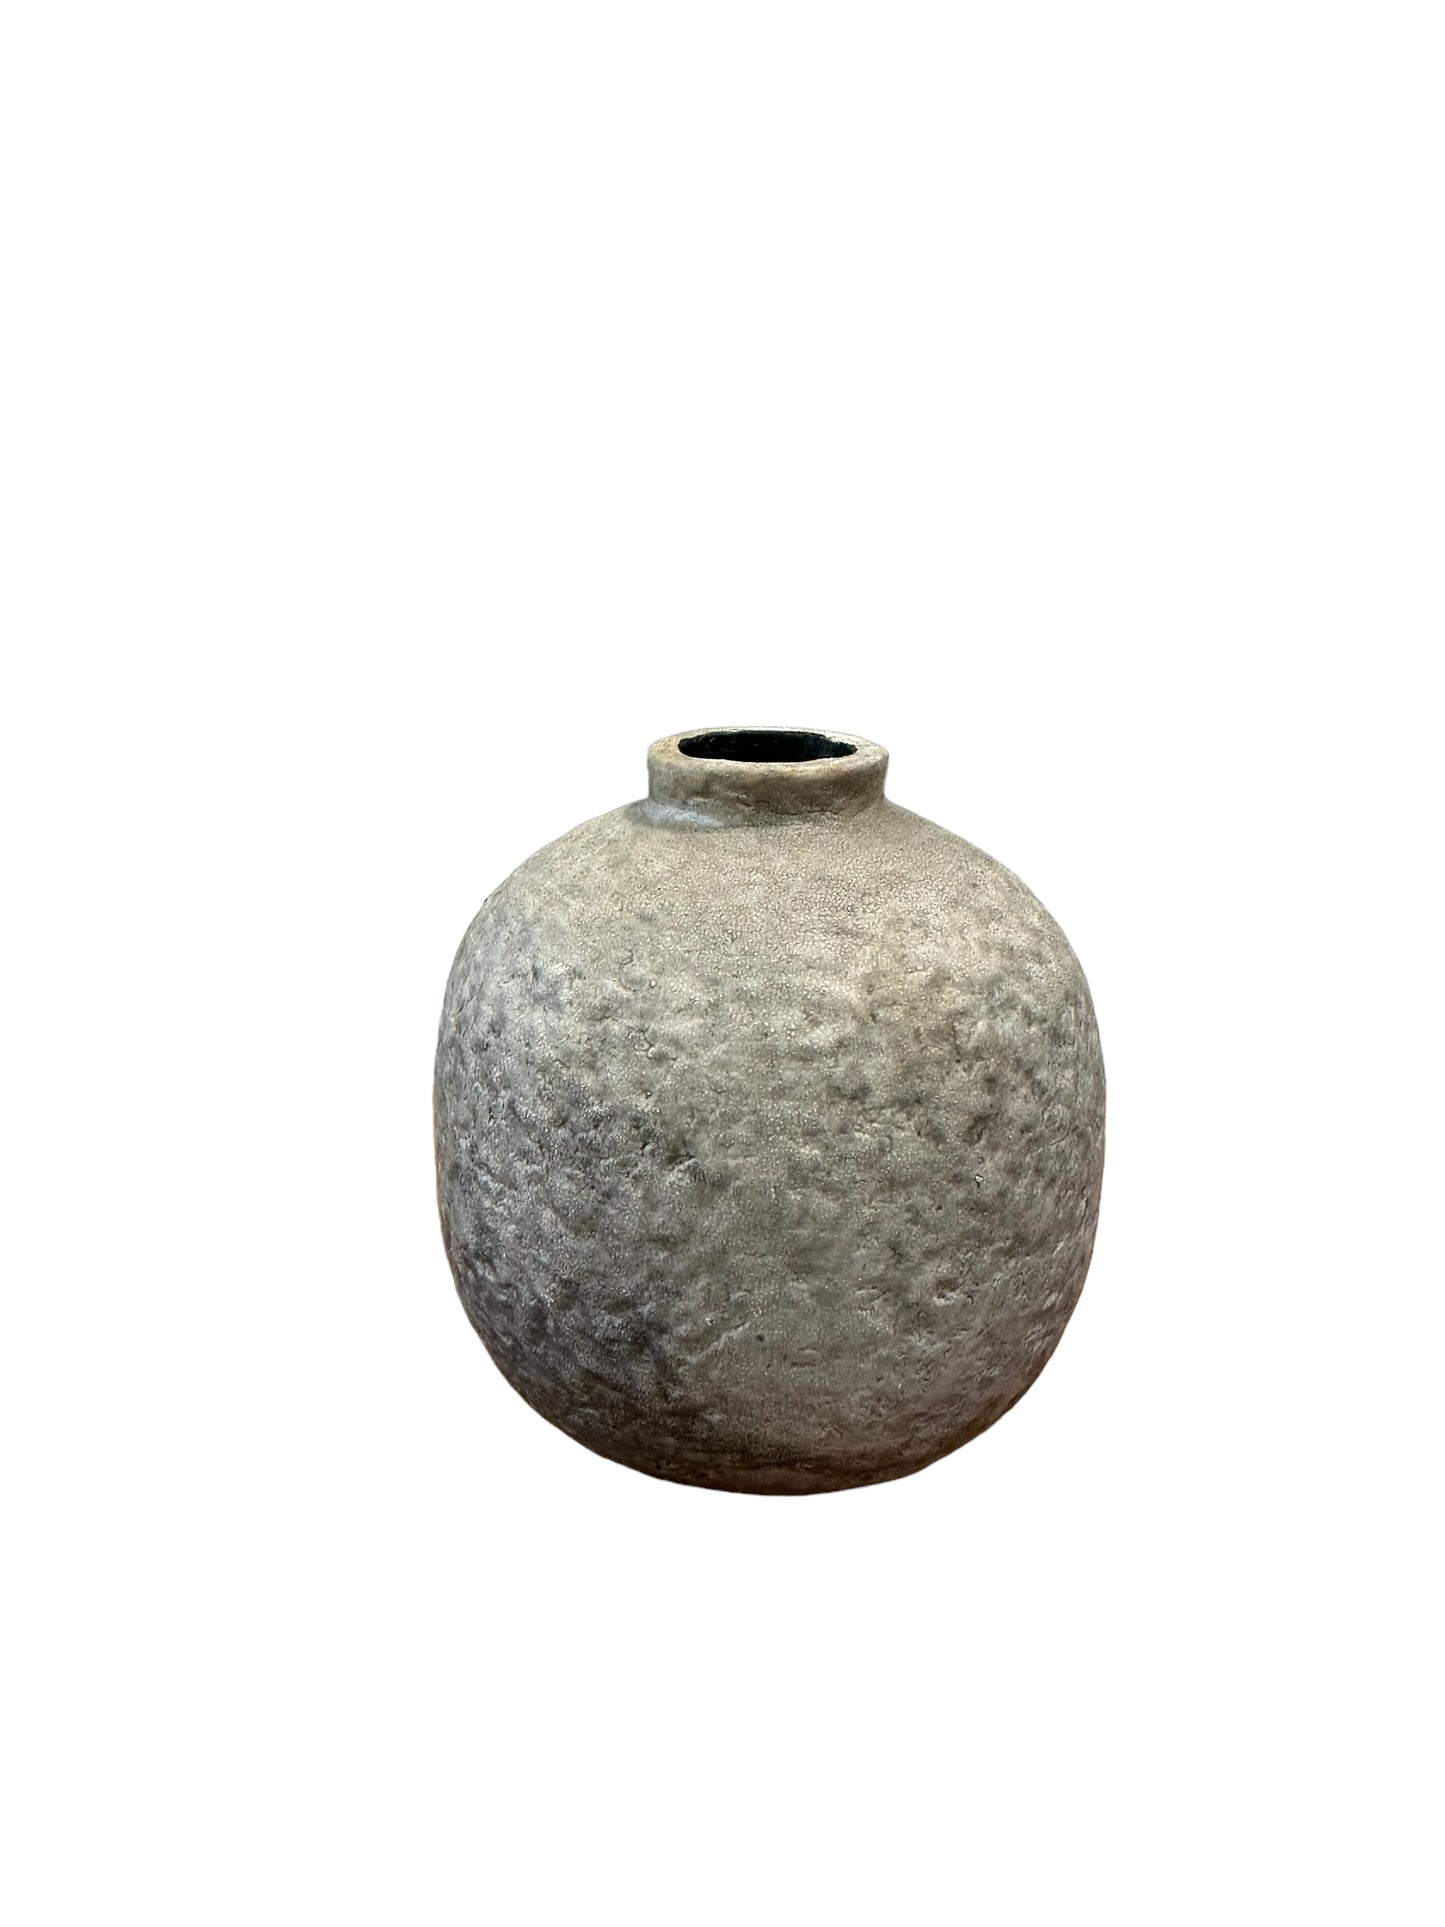 CB843 -Bud Vase / textured